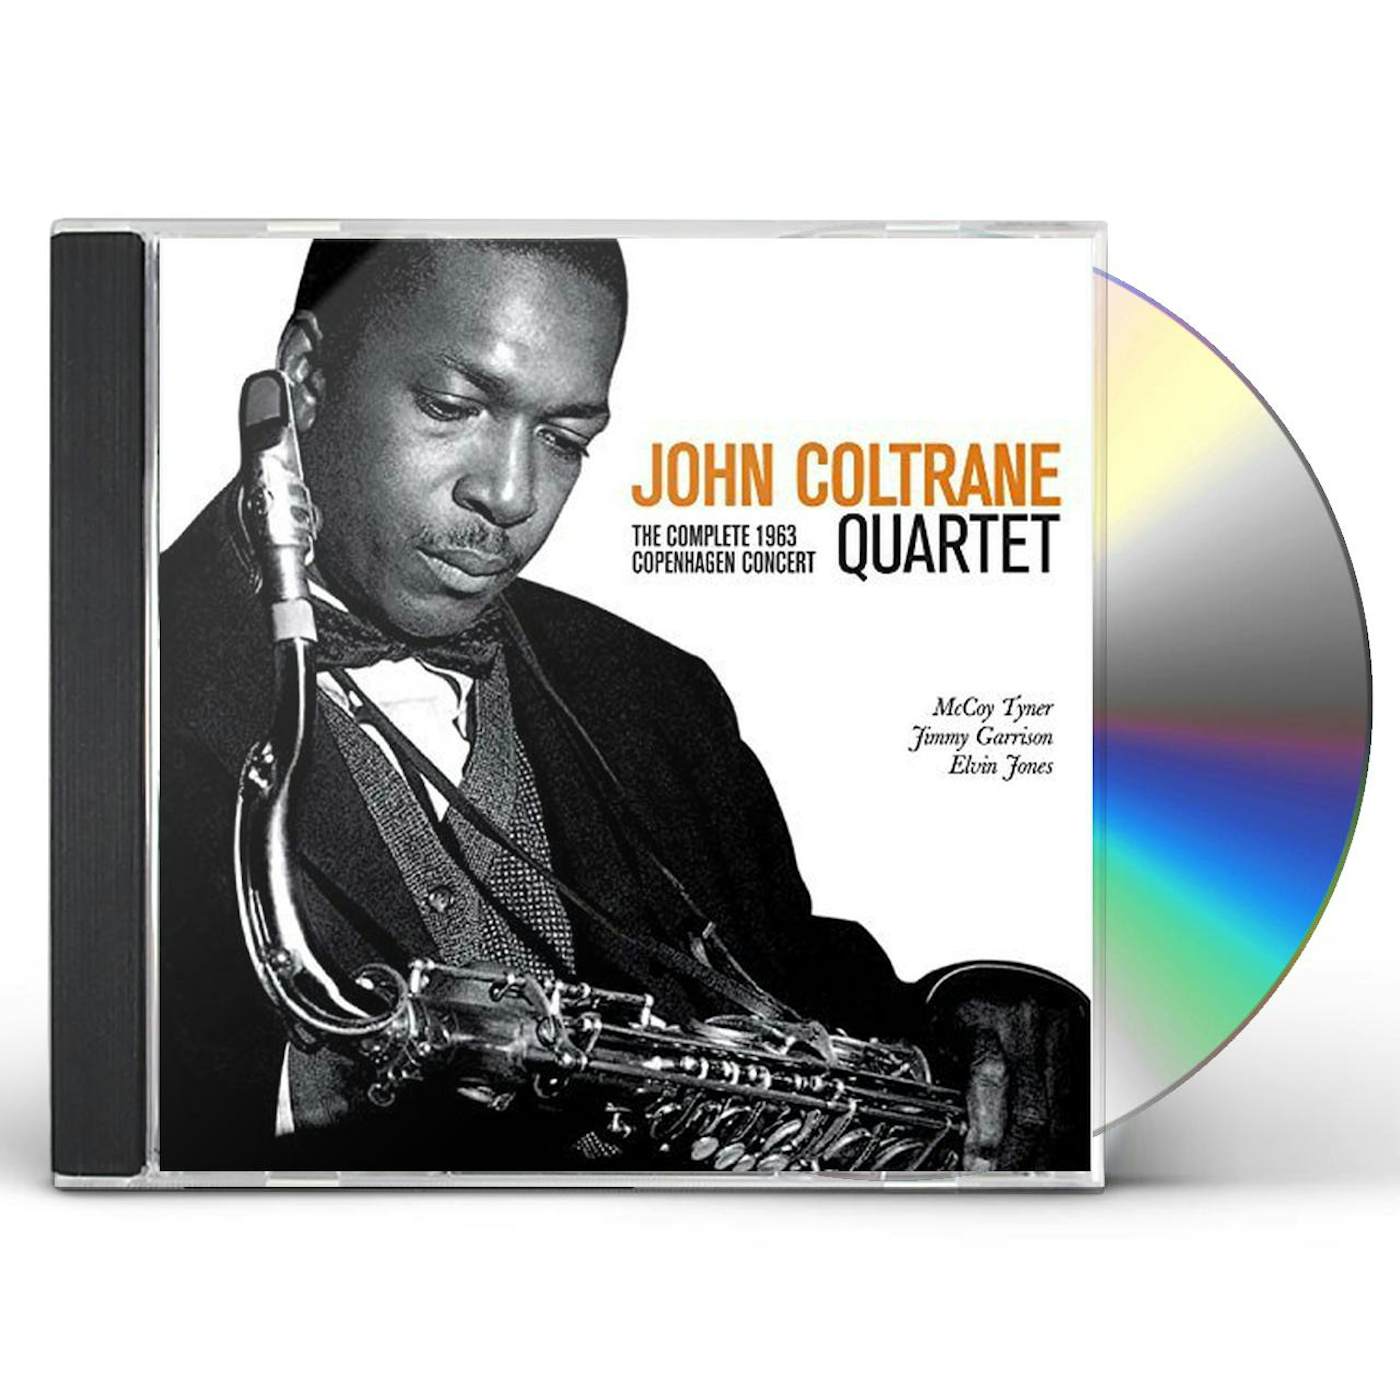 John Coltrane Quartet COMPLETE 1963 COPENHAGEN CONCERT CD